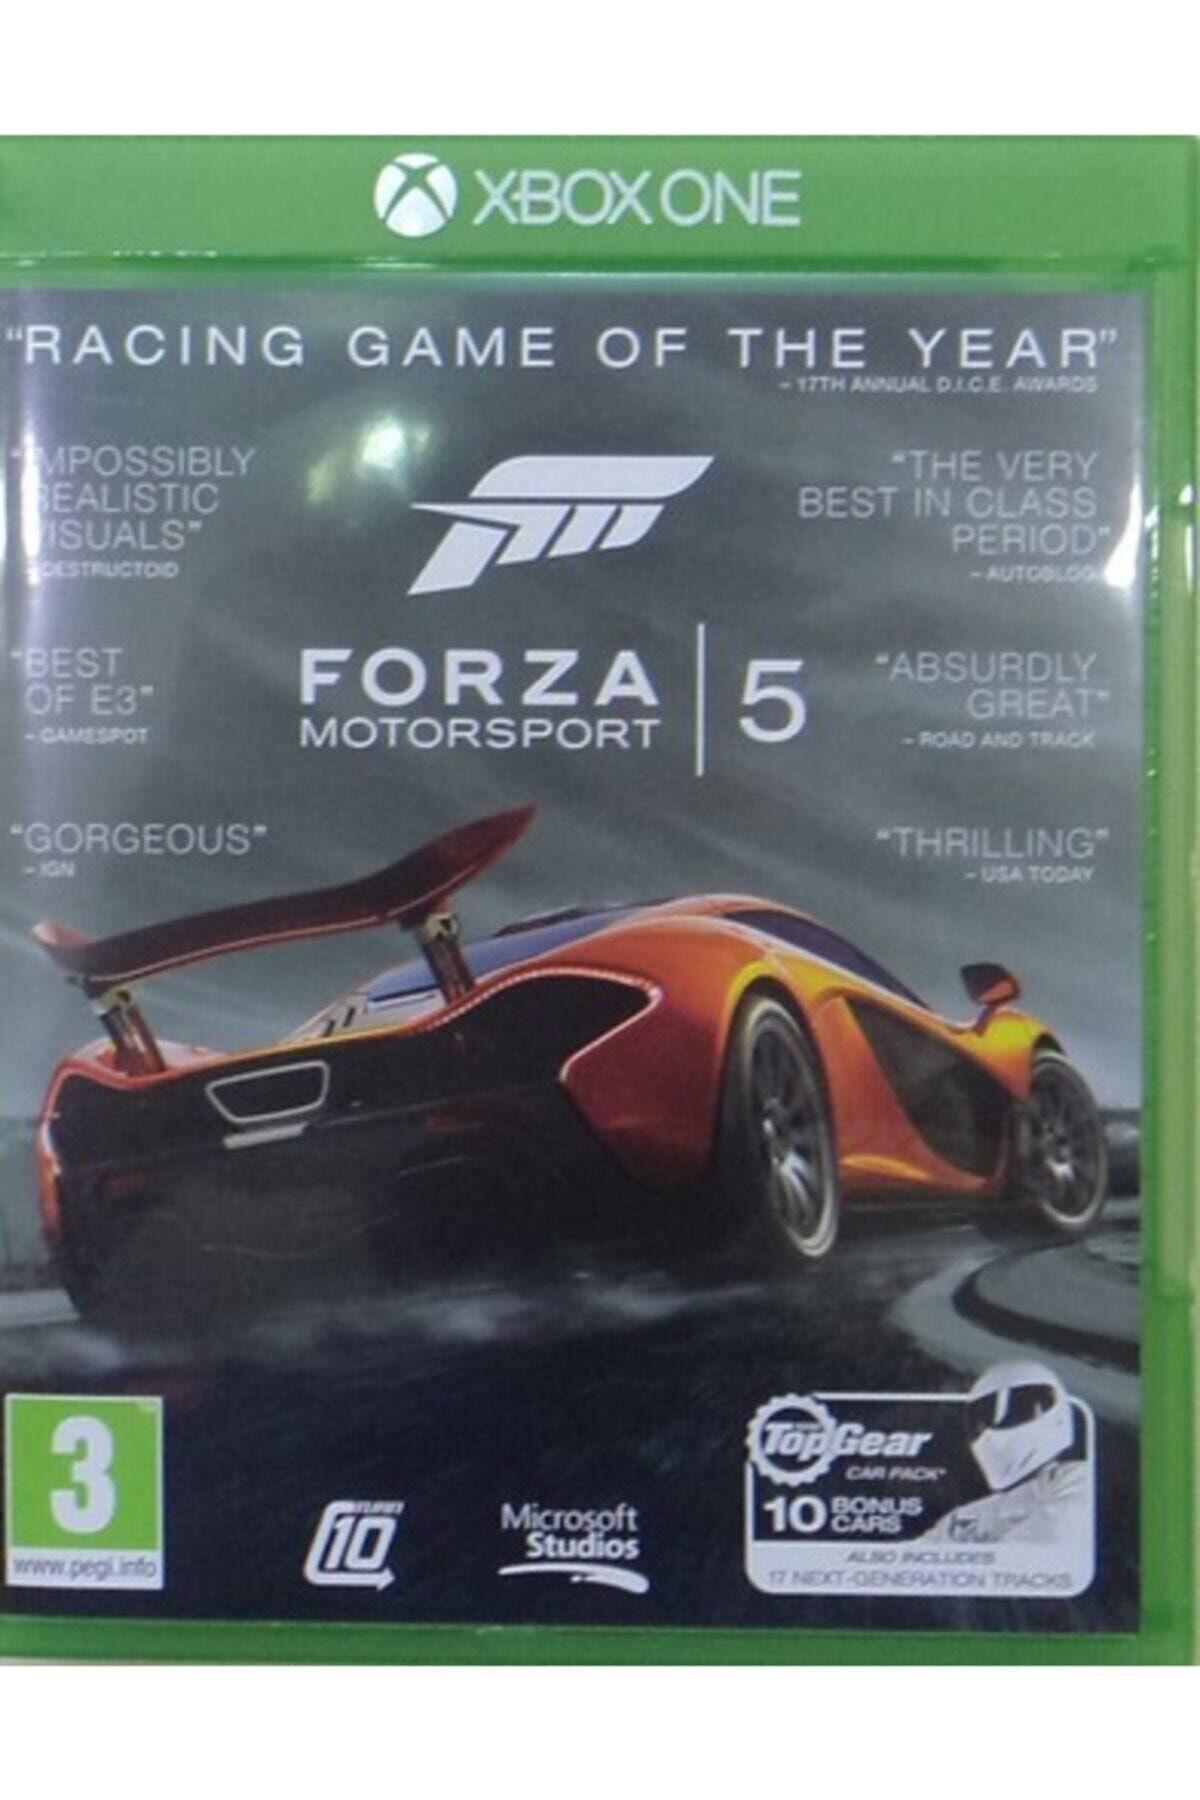 Microsoft Studios Forza Motorsport 5 Xbox One